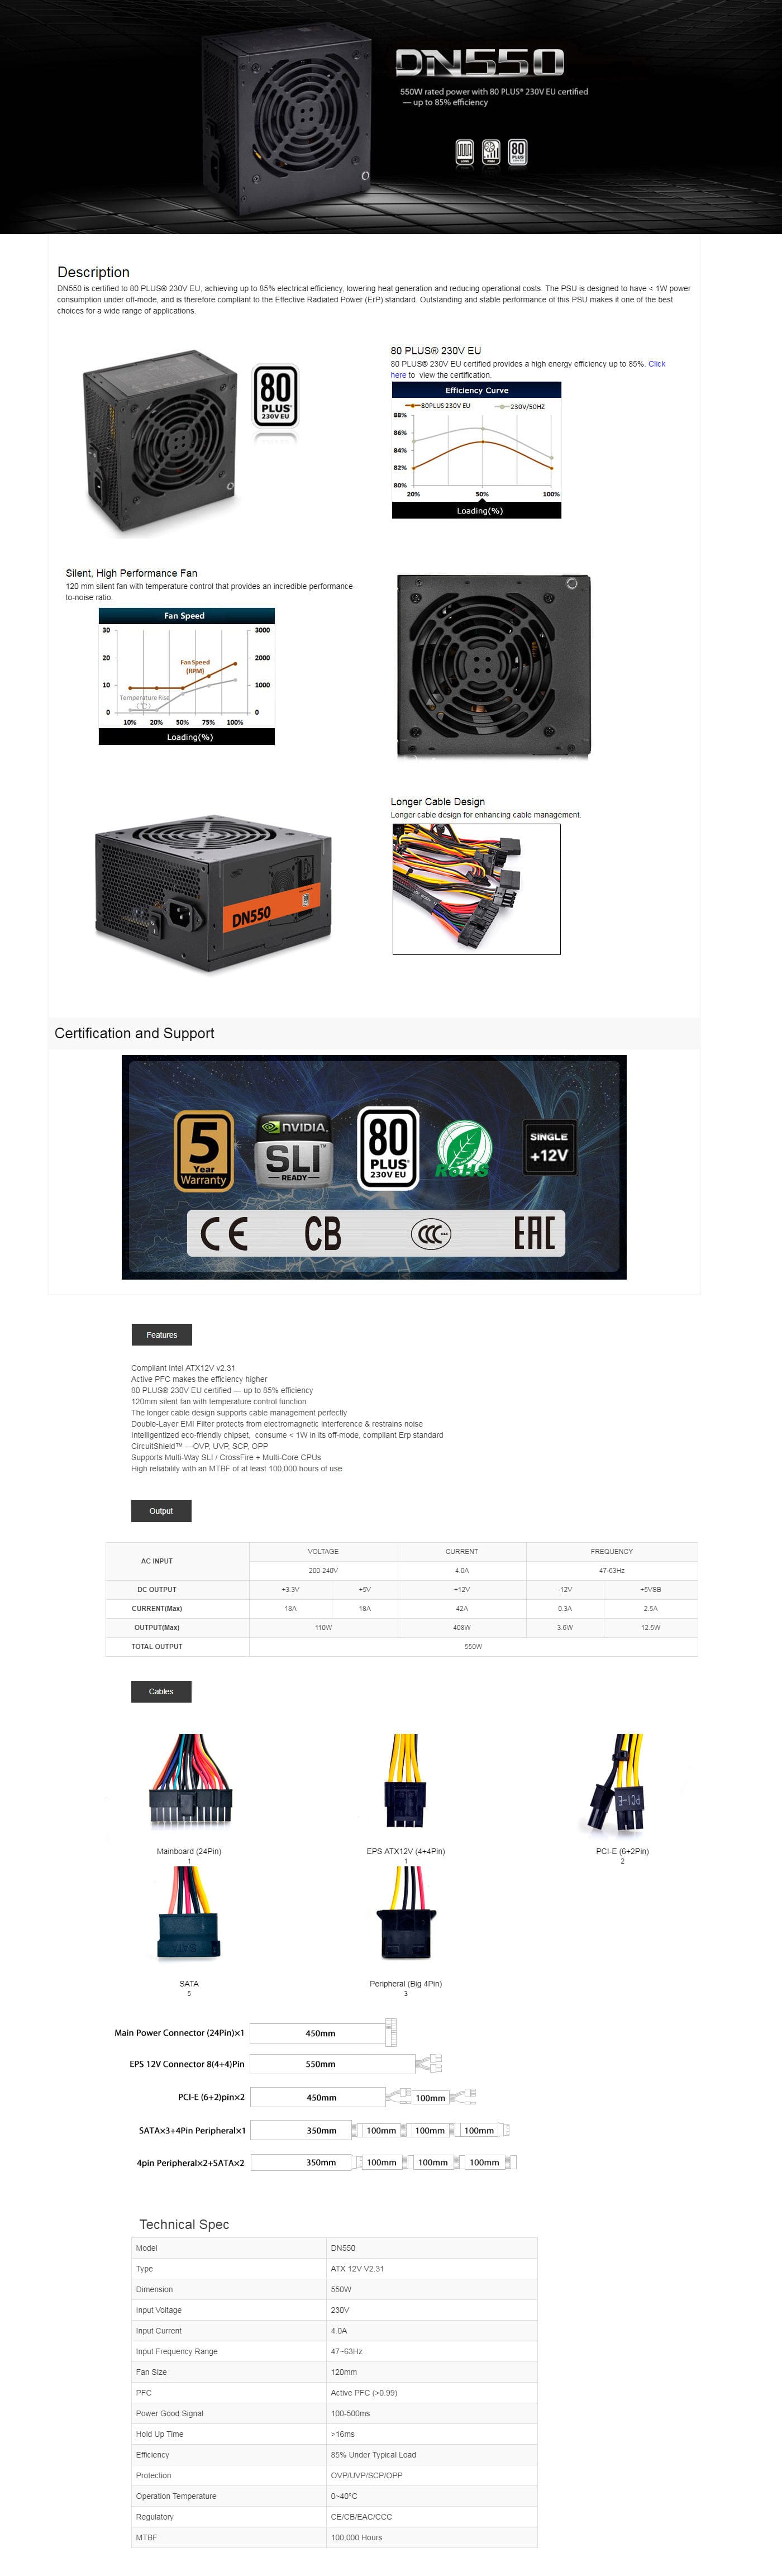  Buy Online Deepcool 550W Power Supply (DN550)